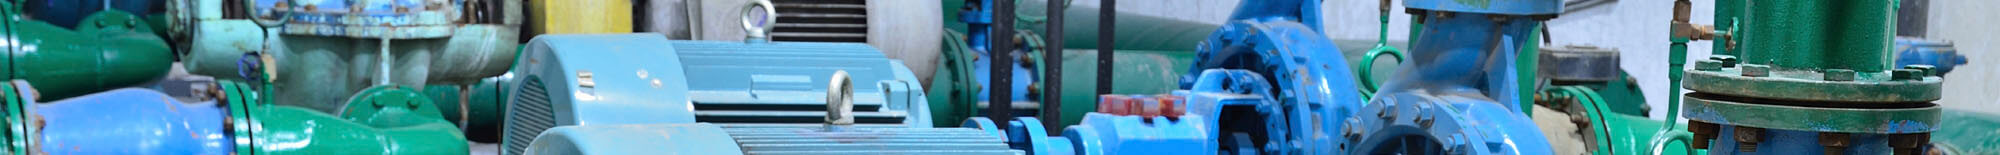 Sanitary Pumps | Industrial Pump Repair, Service, & Maintenance